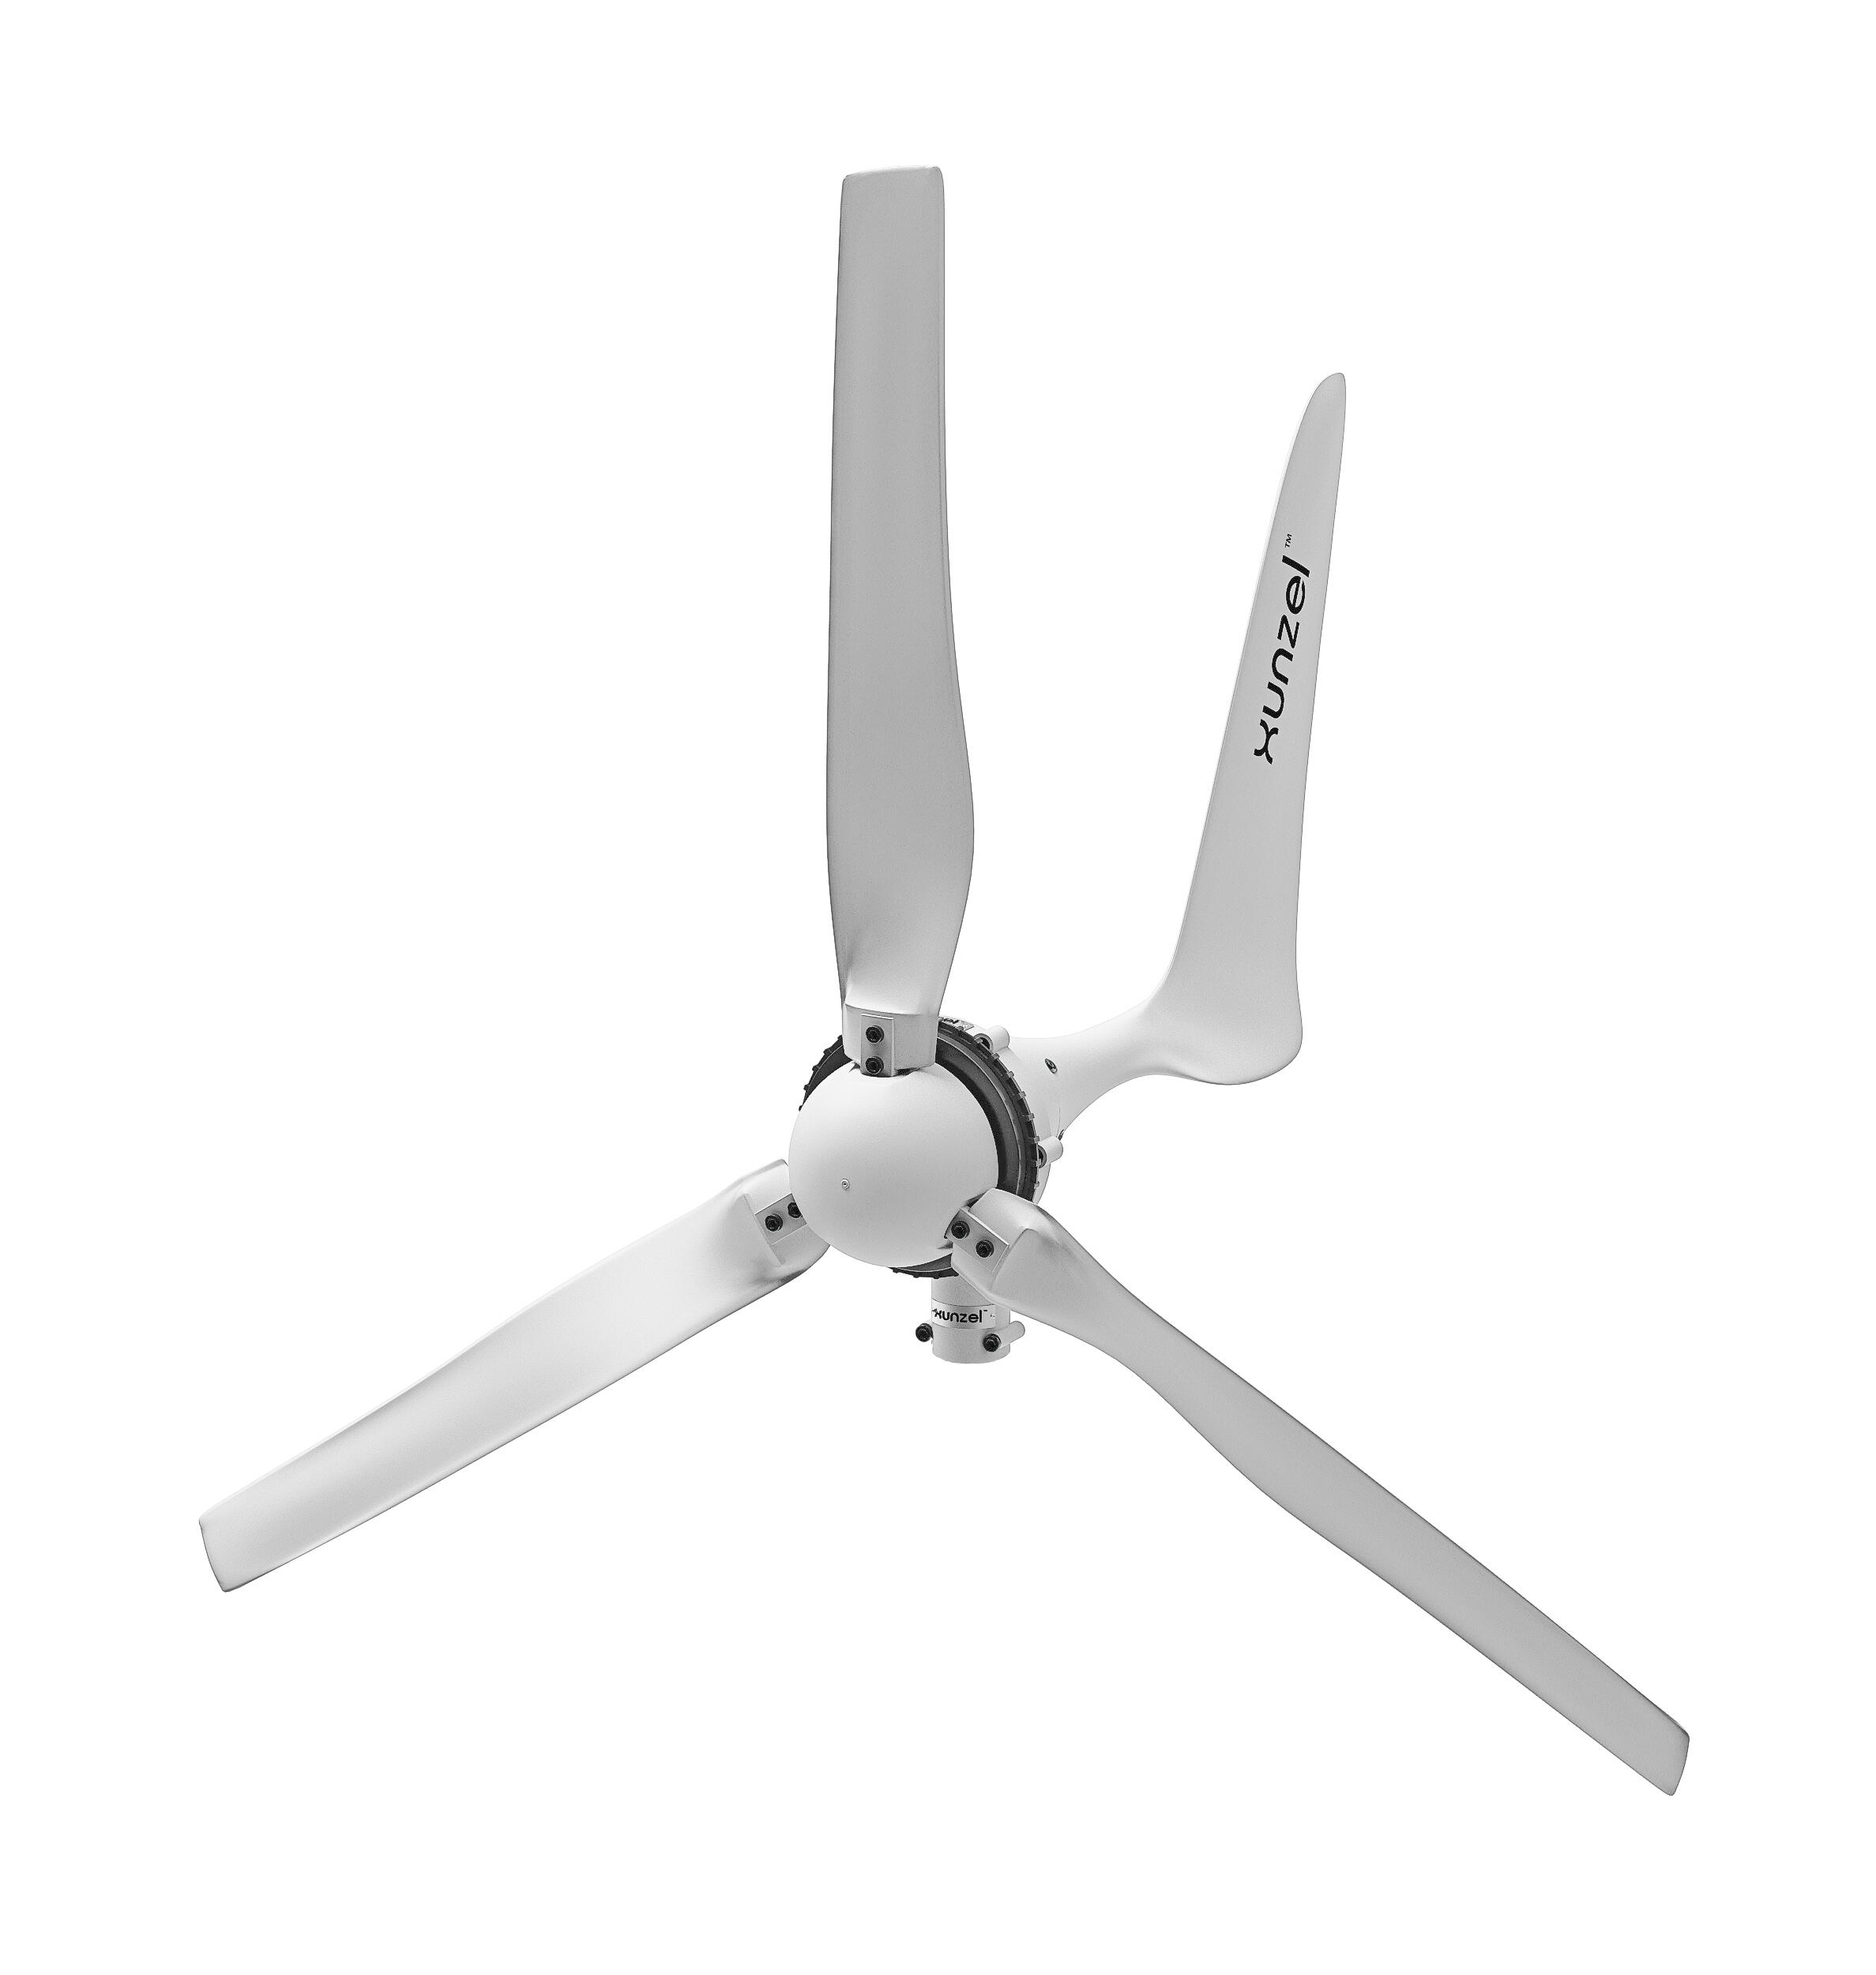 Aerogenerador windforce-xunzel-15000-24v 1500wp hasta 125kwh/mes